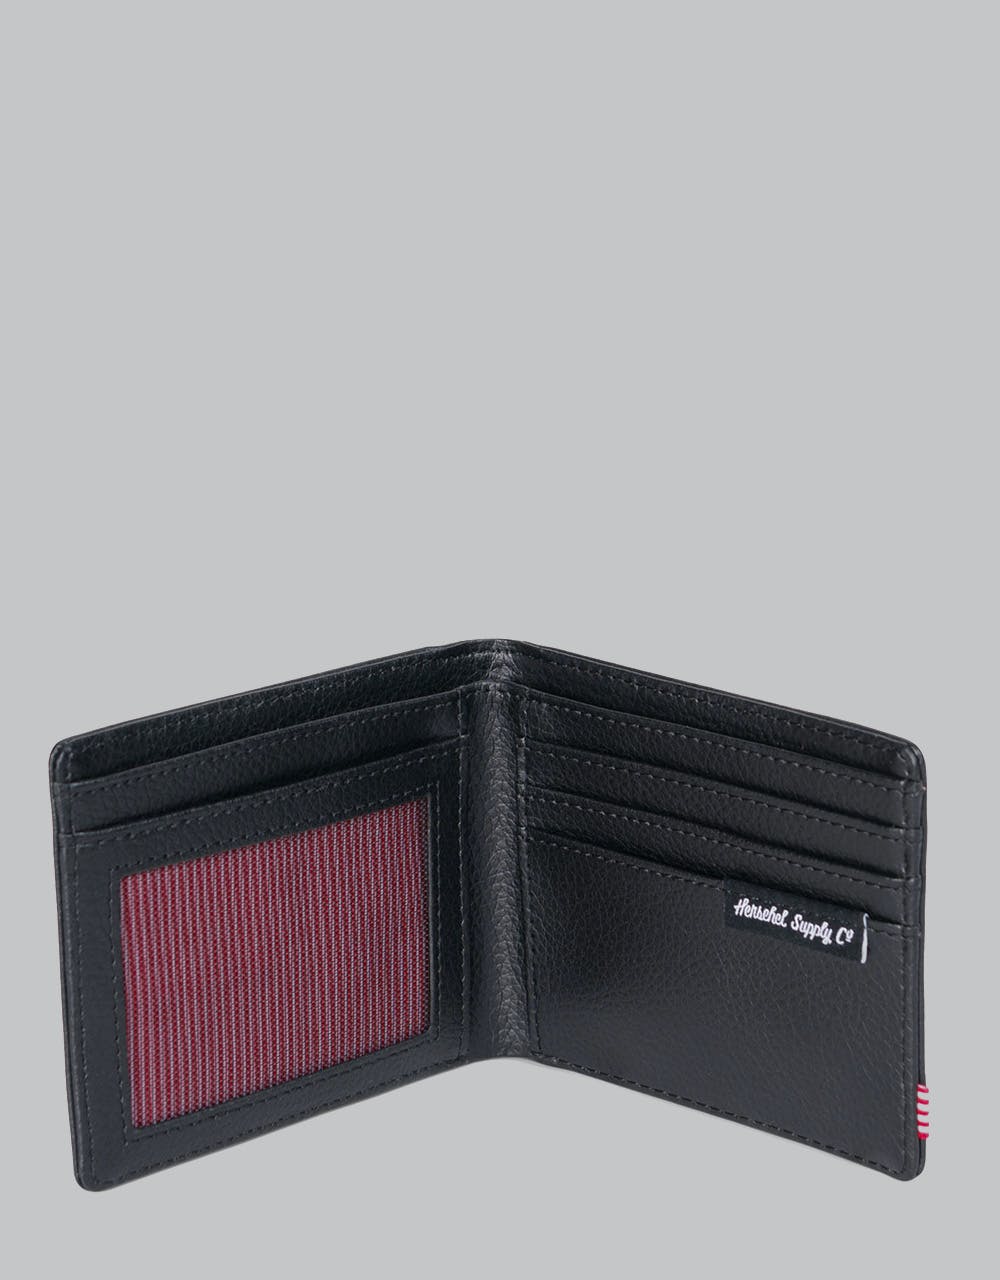 Herschel Supply Co. Hank Leather  RFID Wallet - Black Pebbled Leather